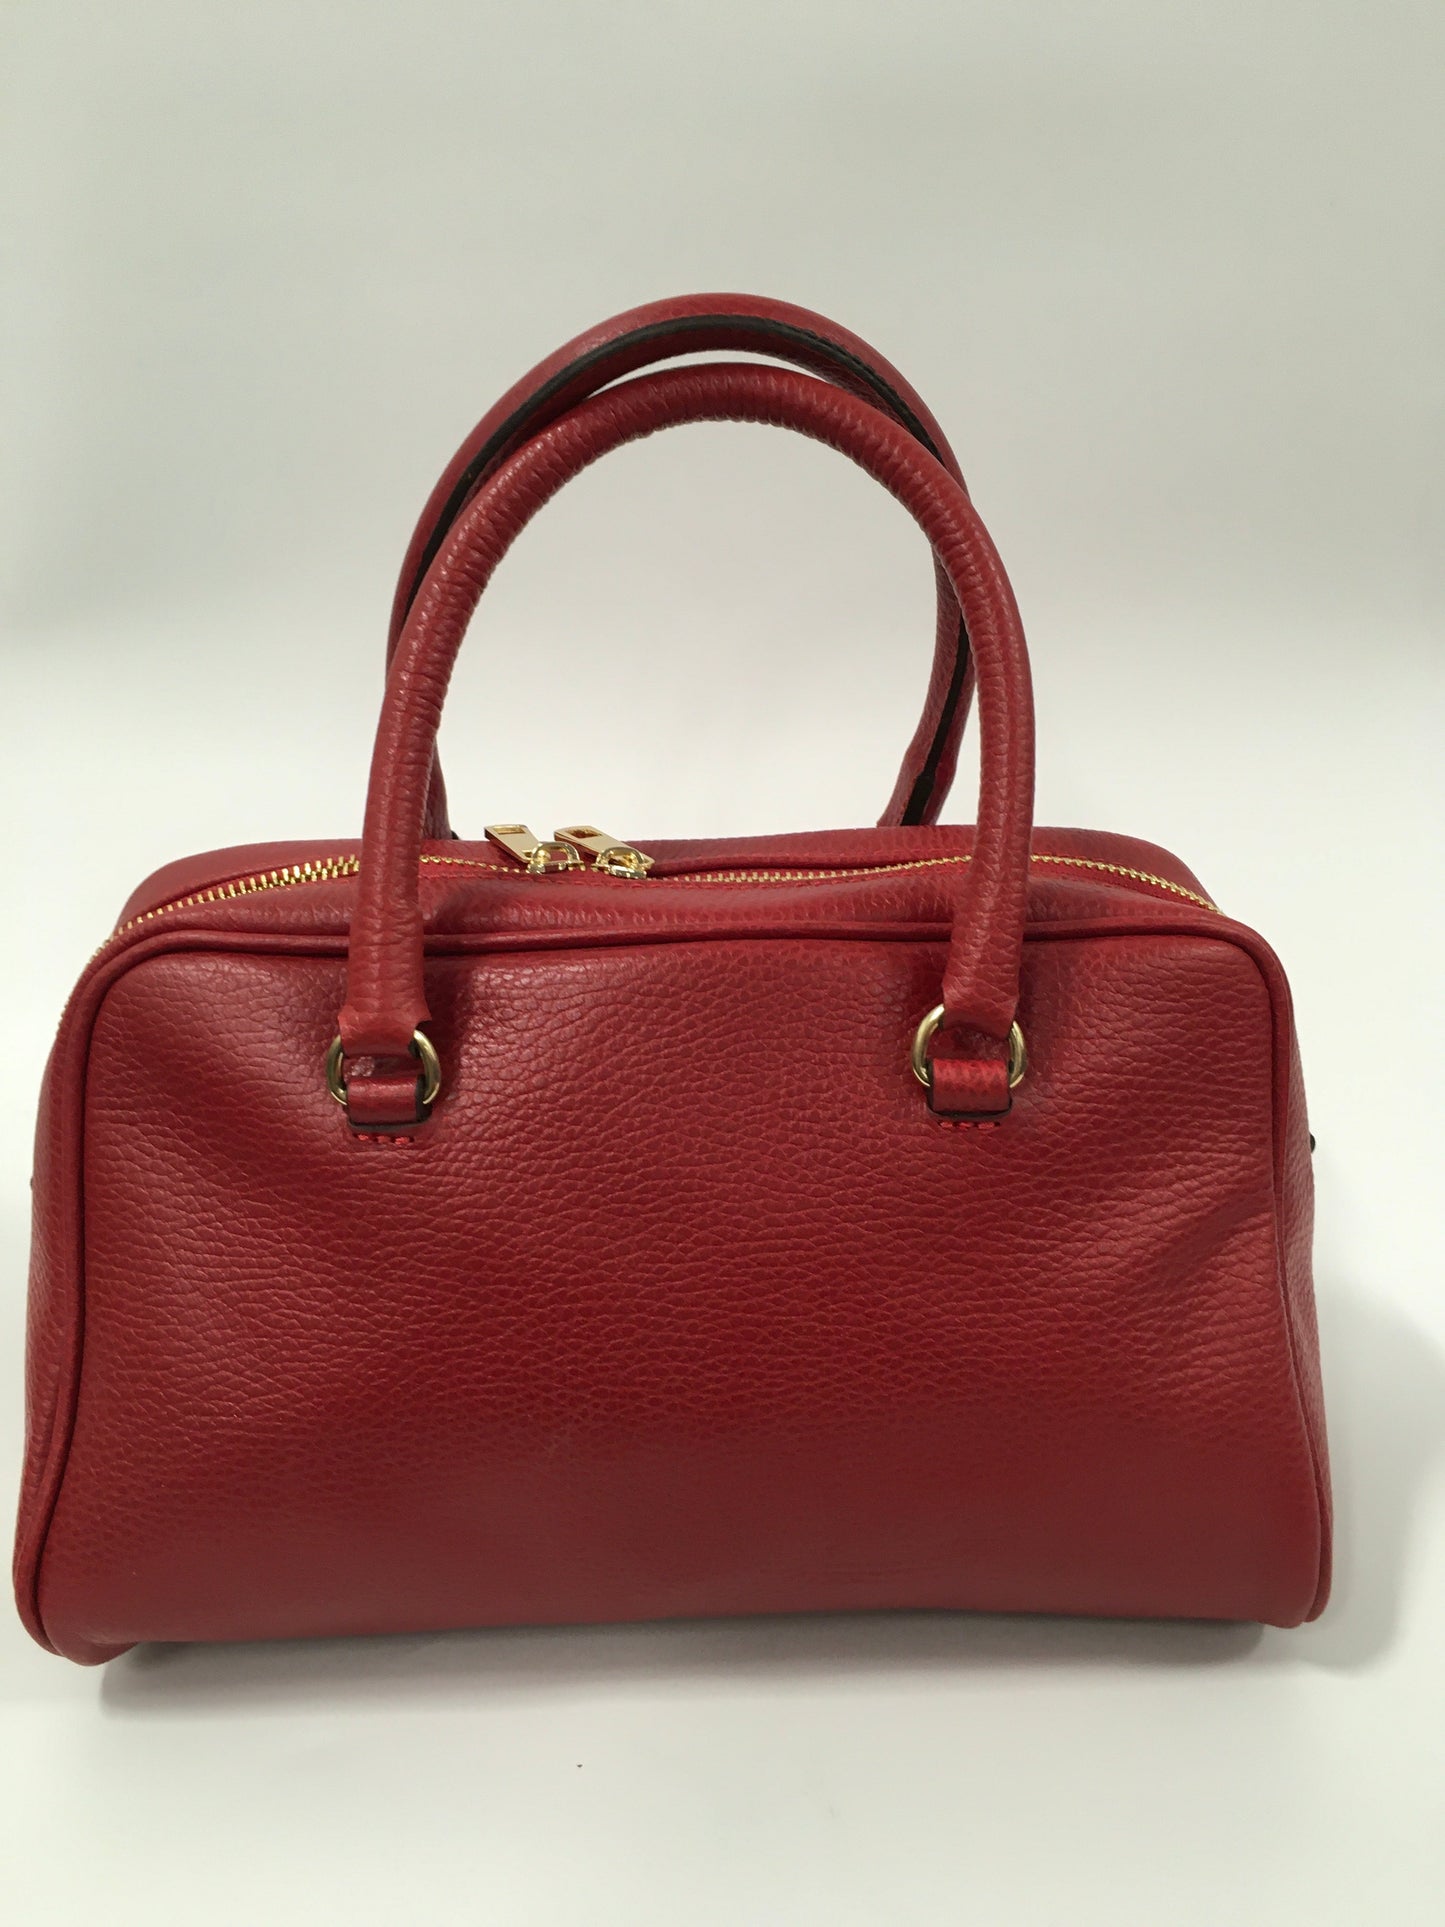 Handbag Leather By : DIVINA FIRENZE  Size: Medium